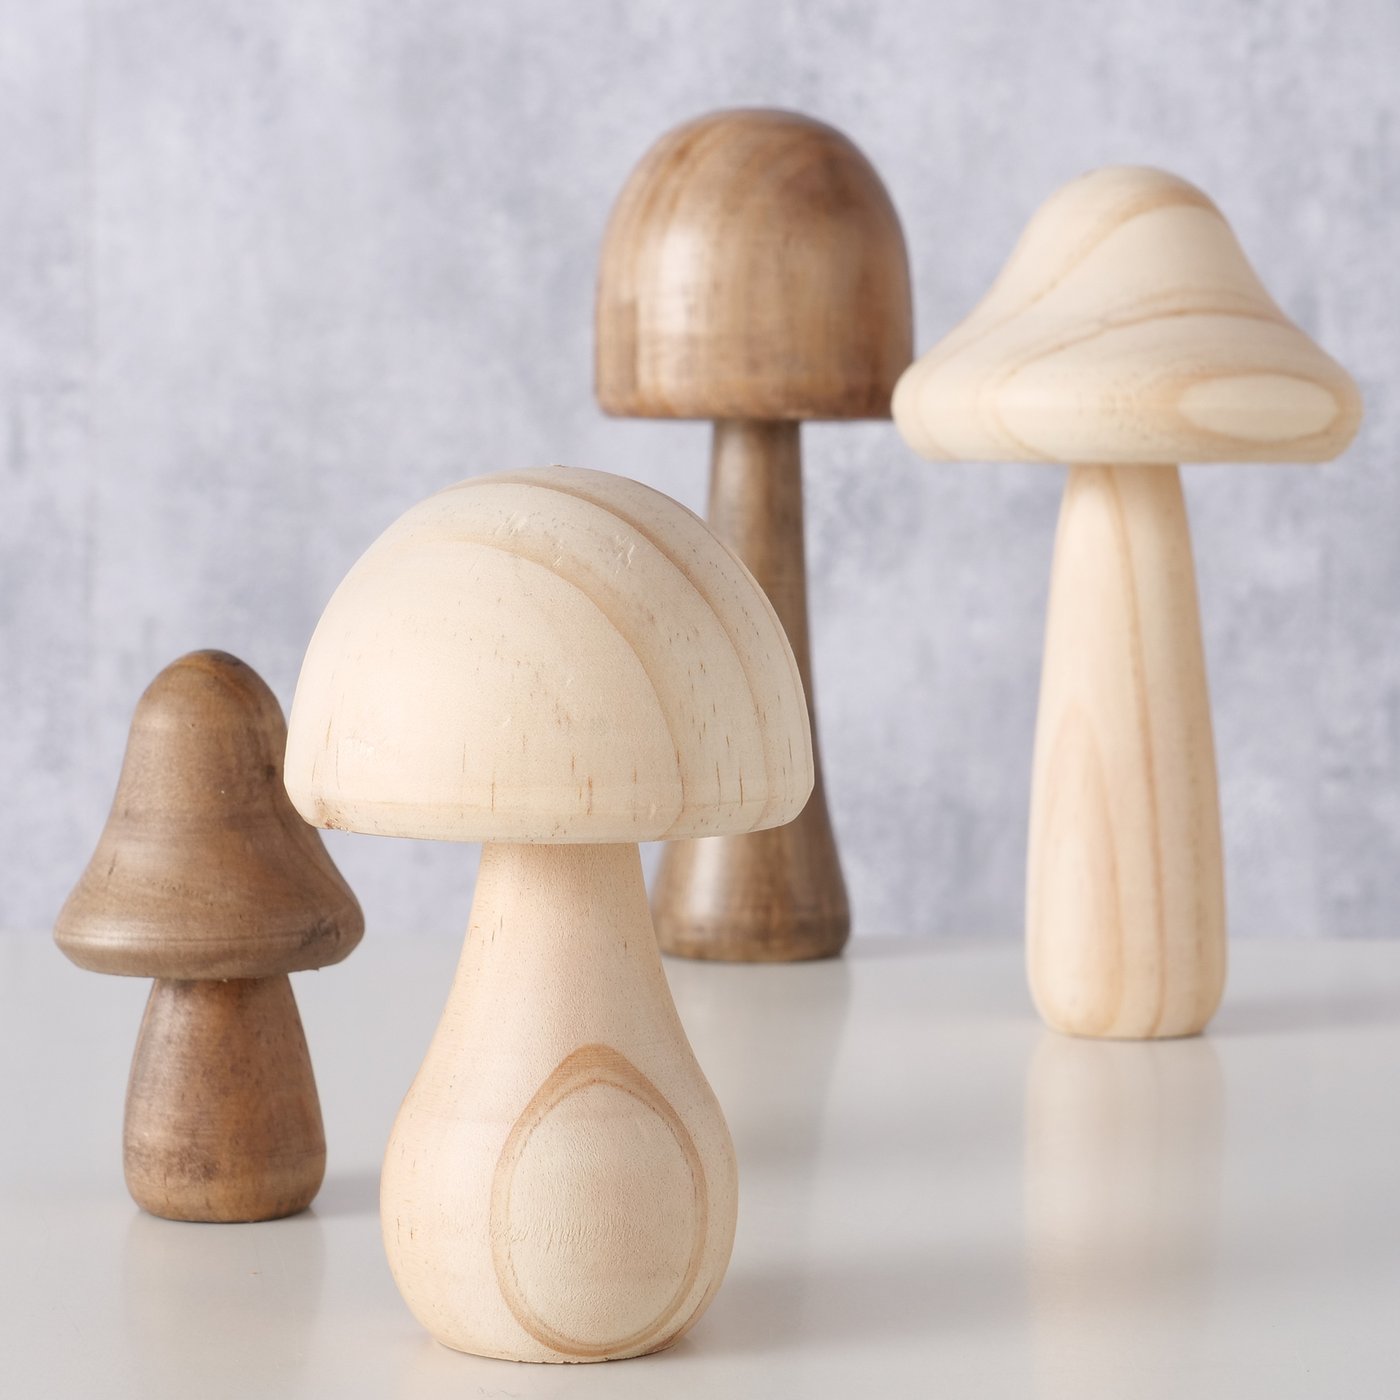  Pilz aus Holz, hell und bauchig, ca. 10 x 6 cm, pro Stück